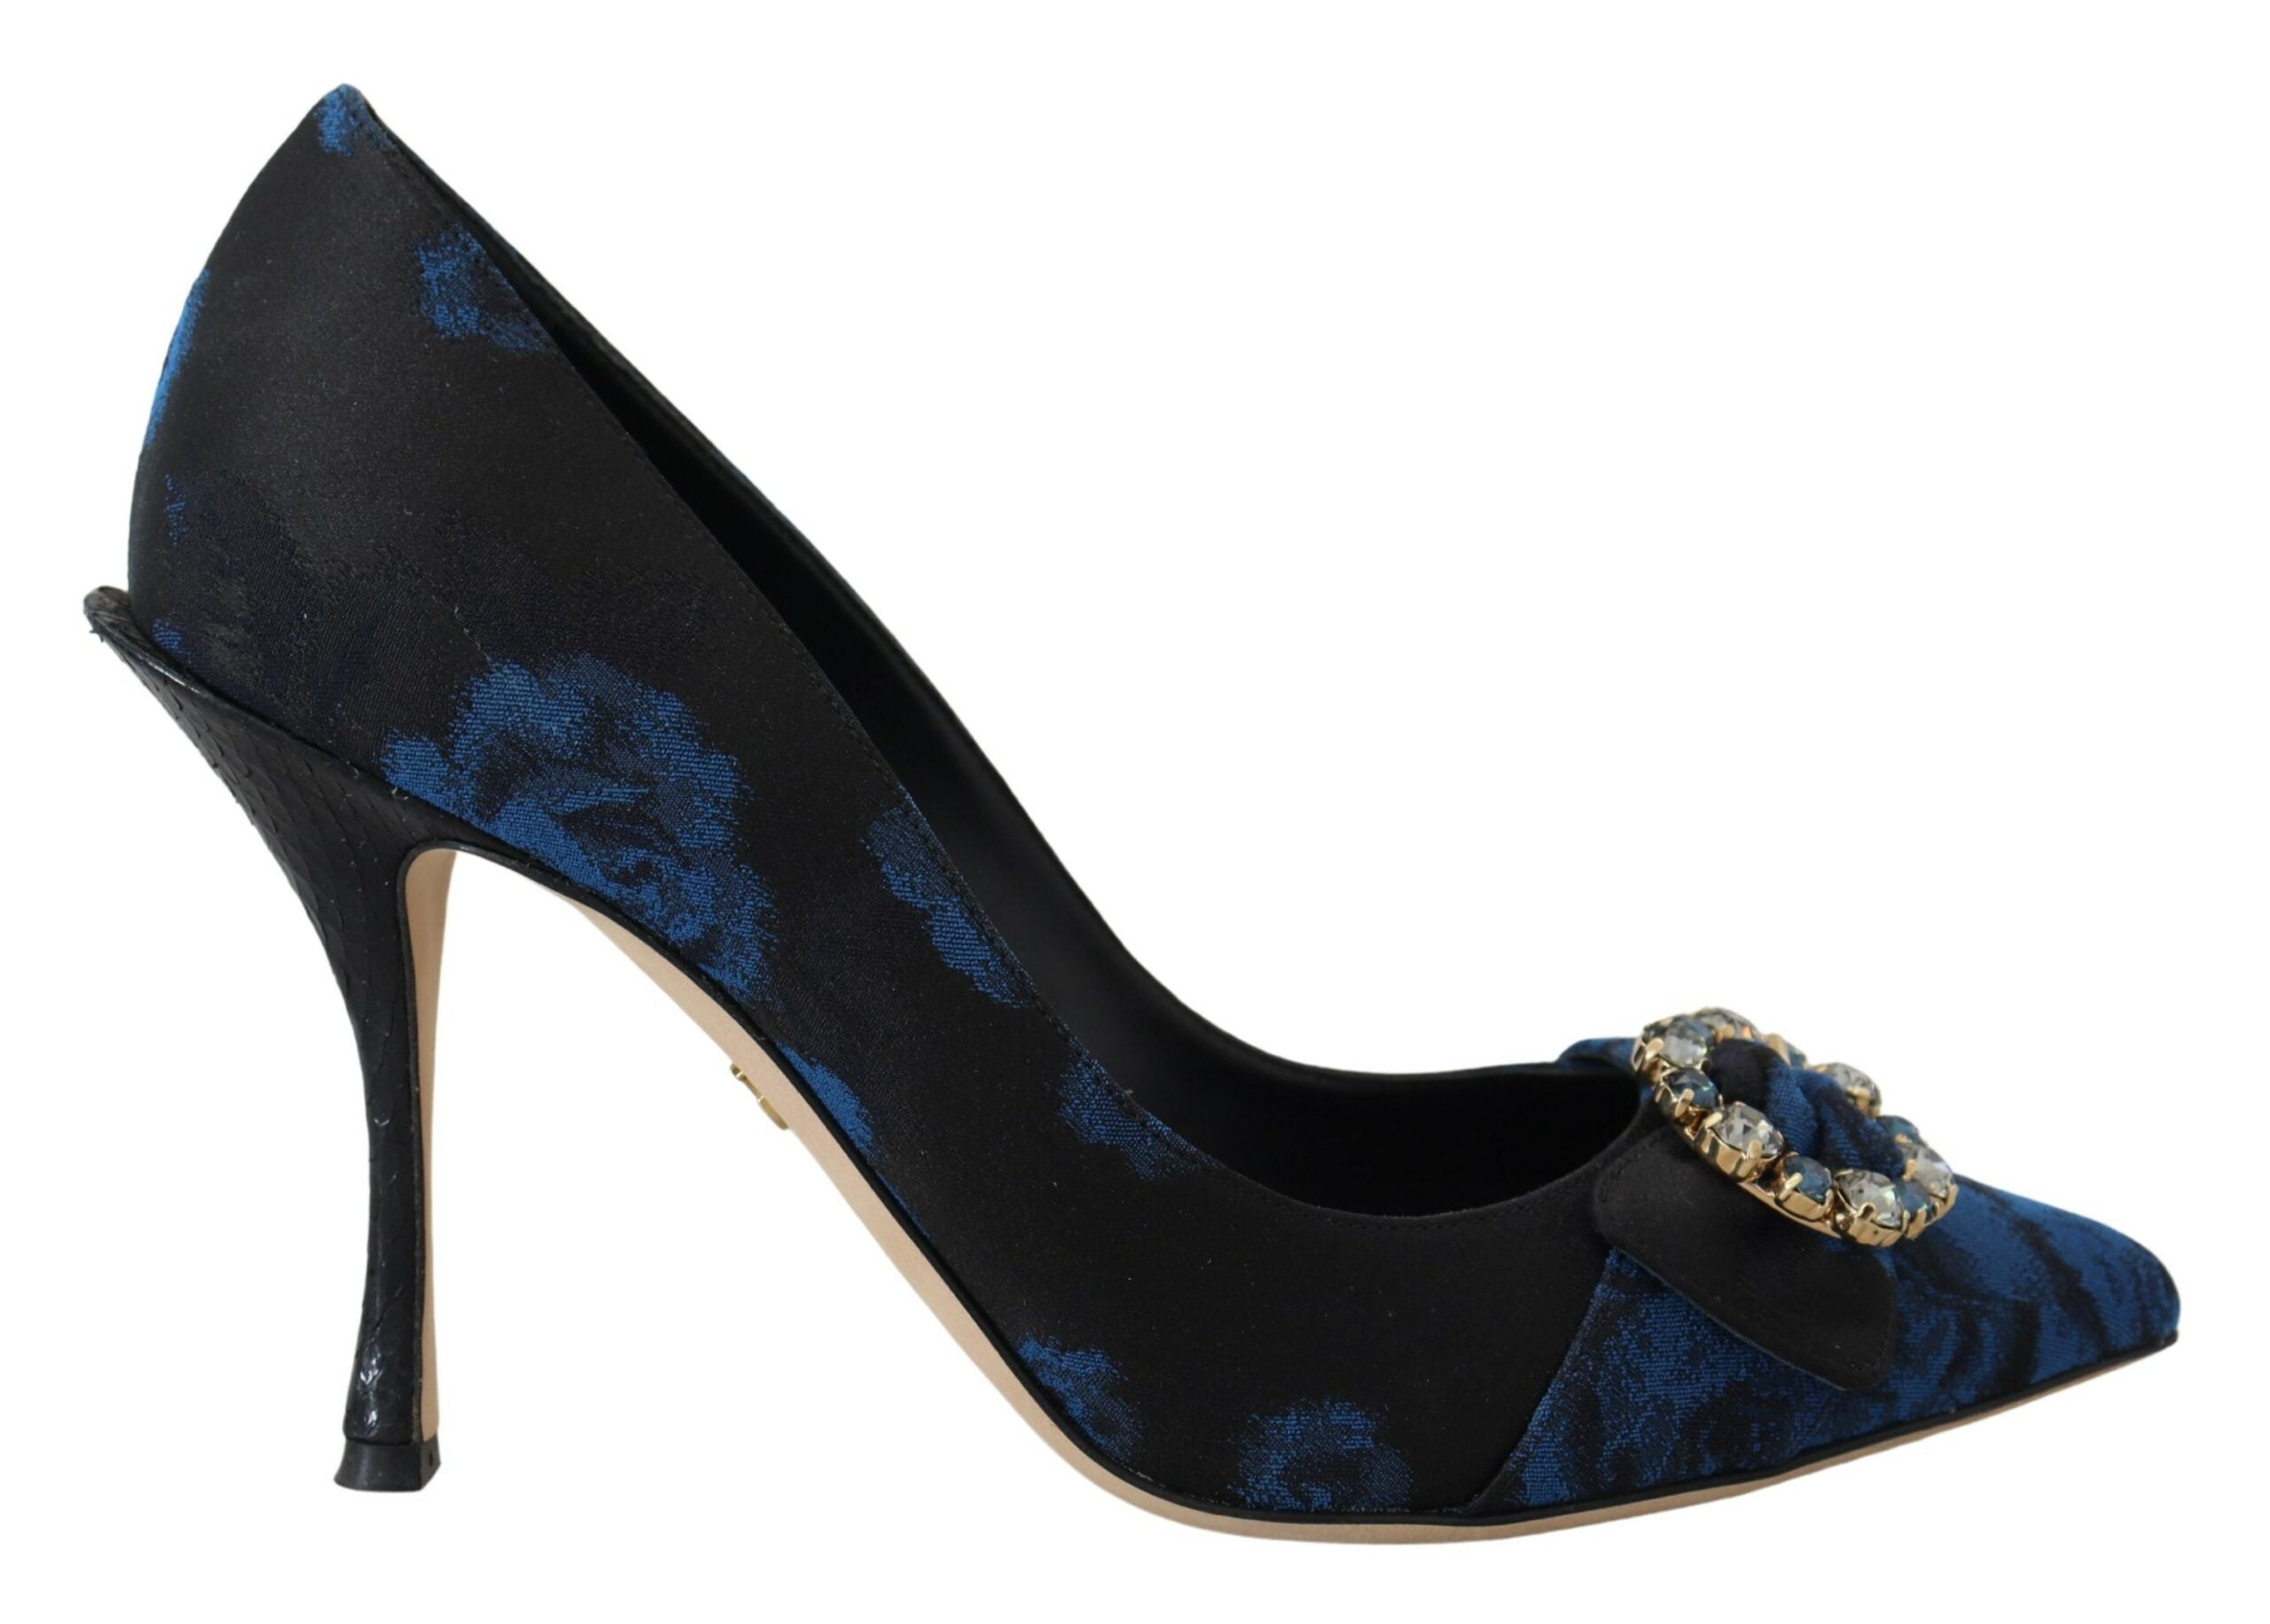 DOLCE & GABBANA Dolce & Gabbana Crystal Embellished Heels Pumps Women's Shoes